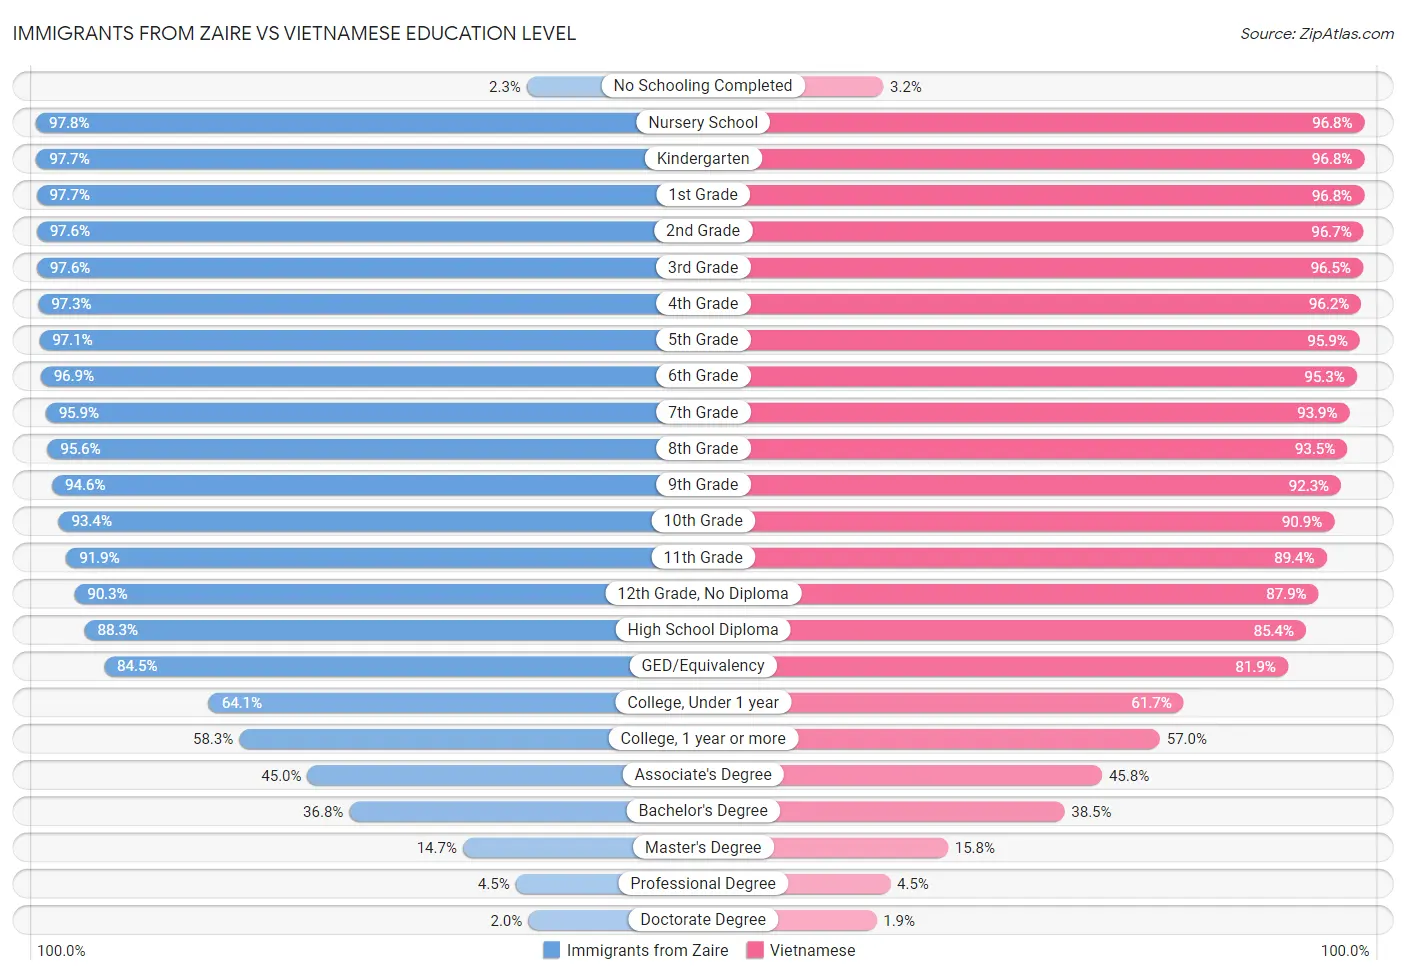 Immigrants from Zaire vs Vietnamese Education Level